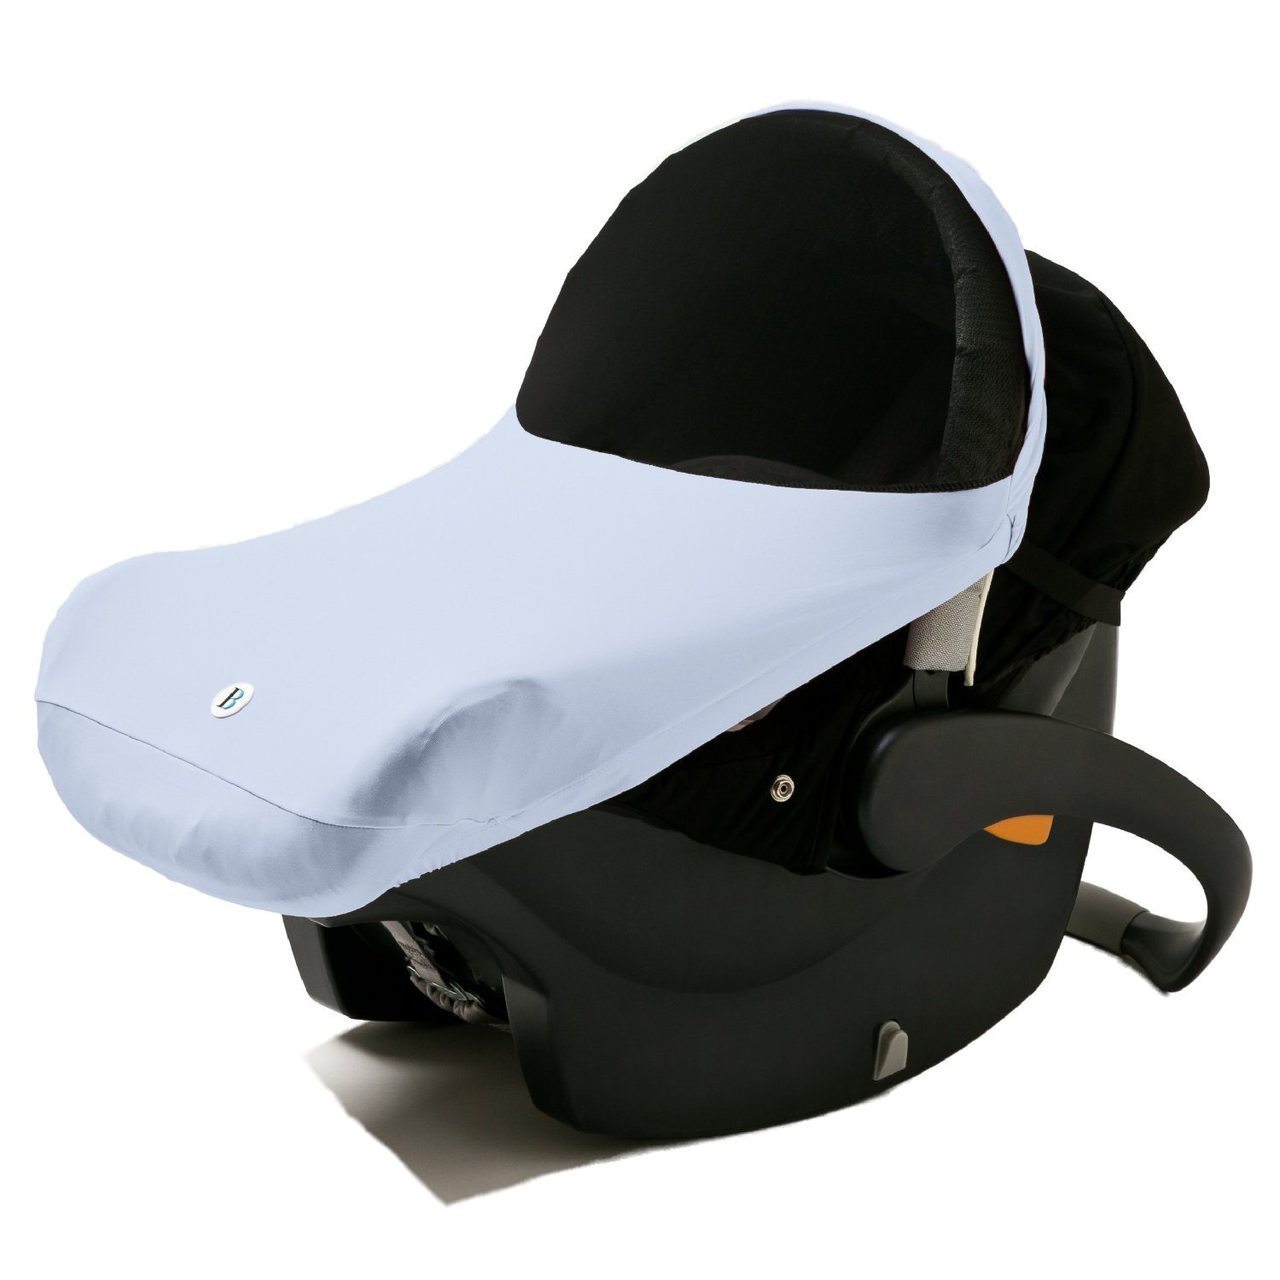 Imagine Baby Car Seat Canopy Shade